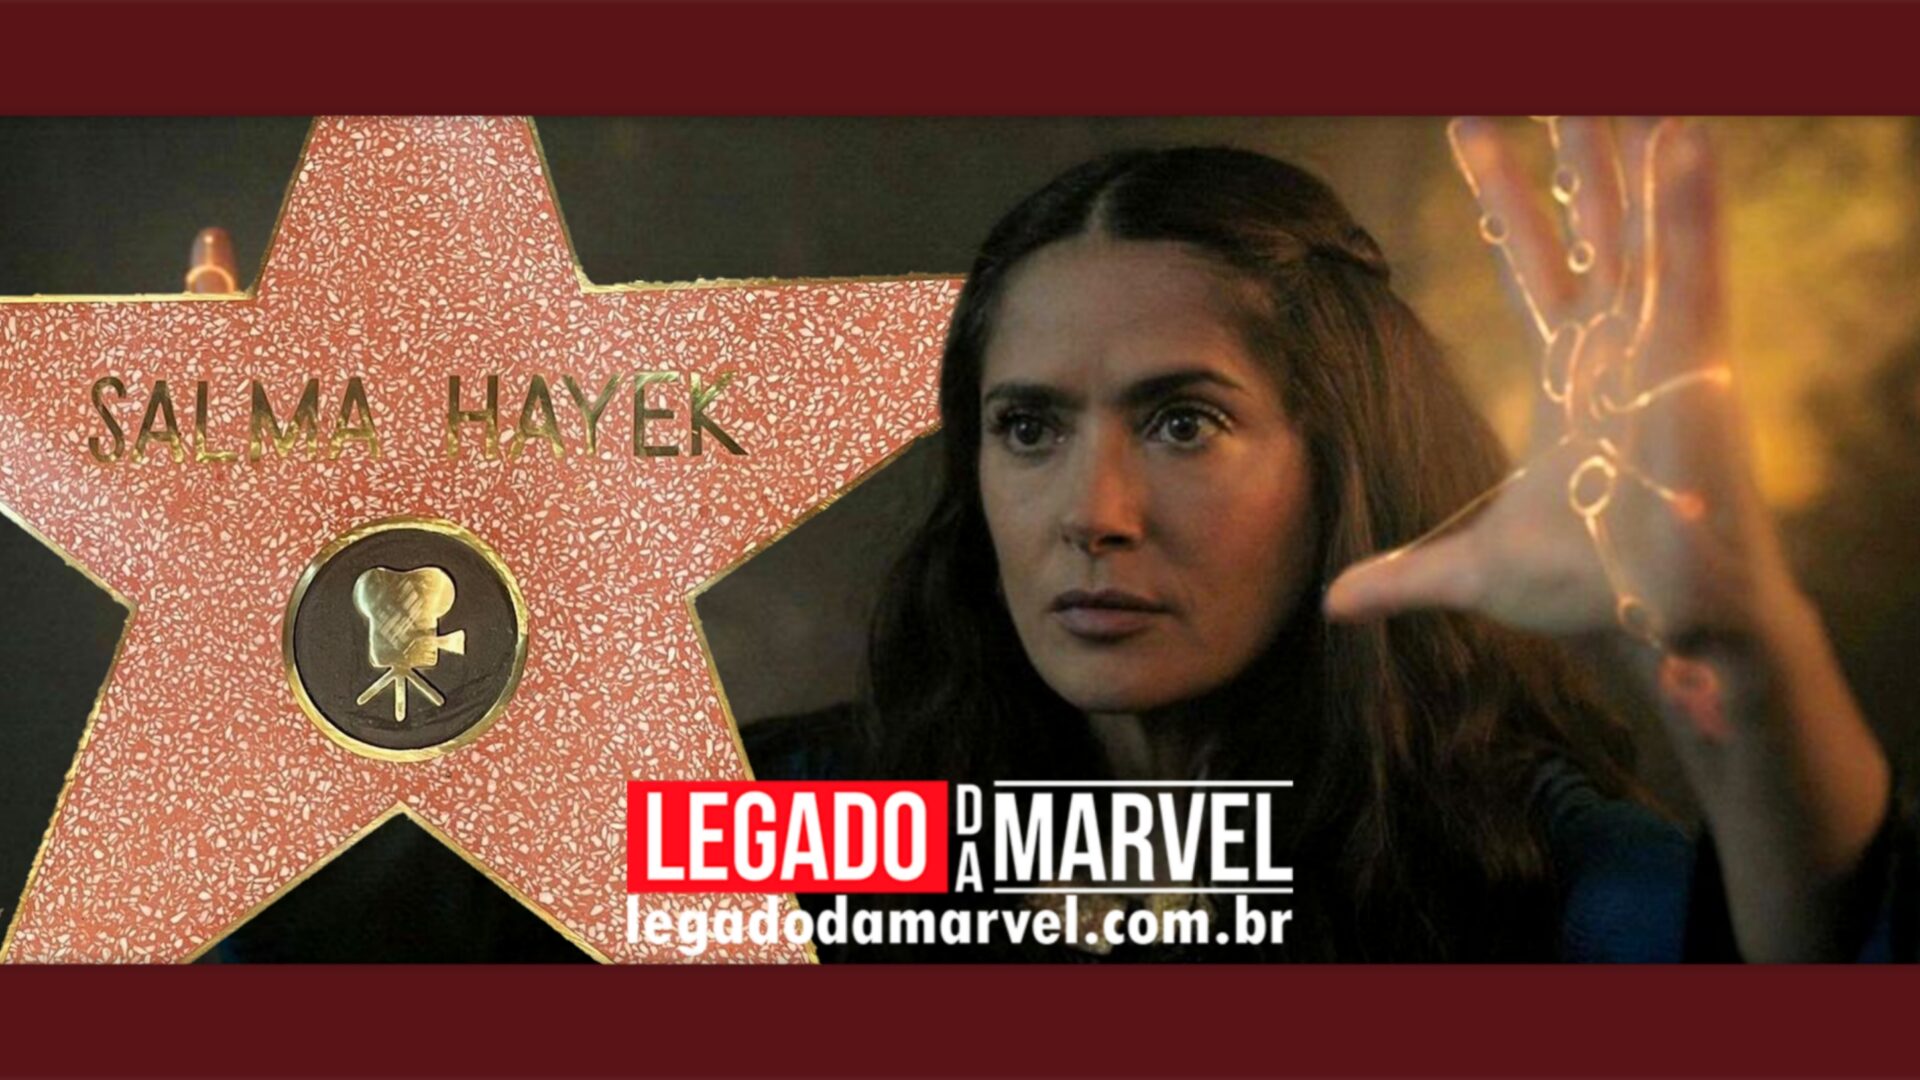  Salma Hayek, de Eternos, recebe sua estrela na calçada da fama